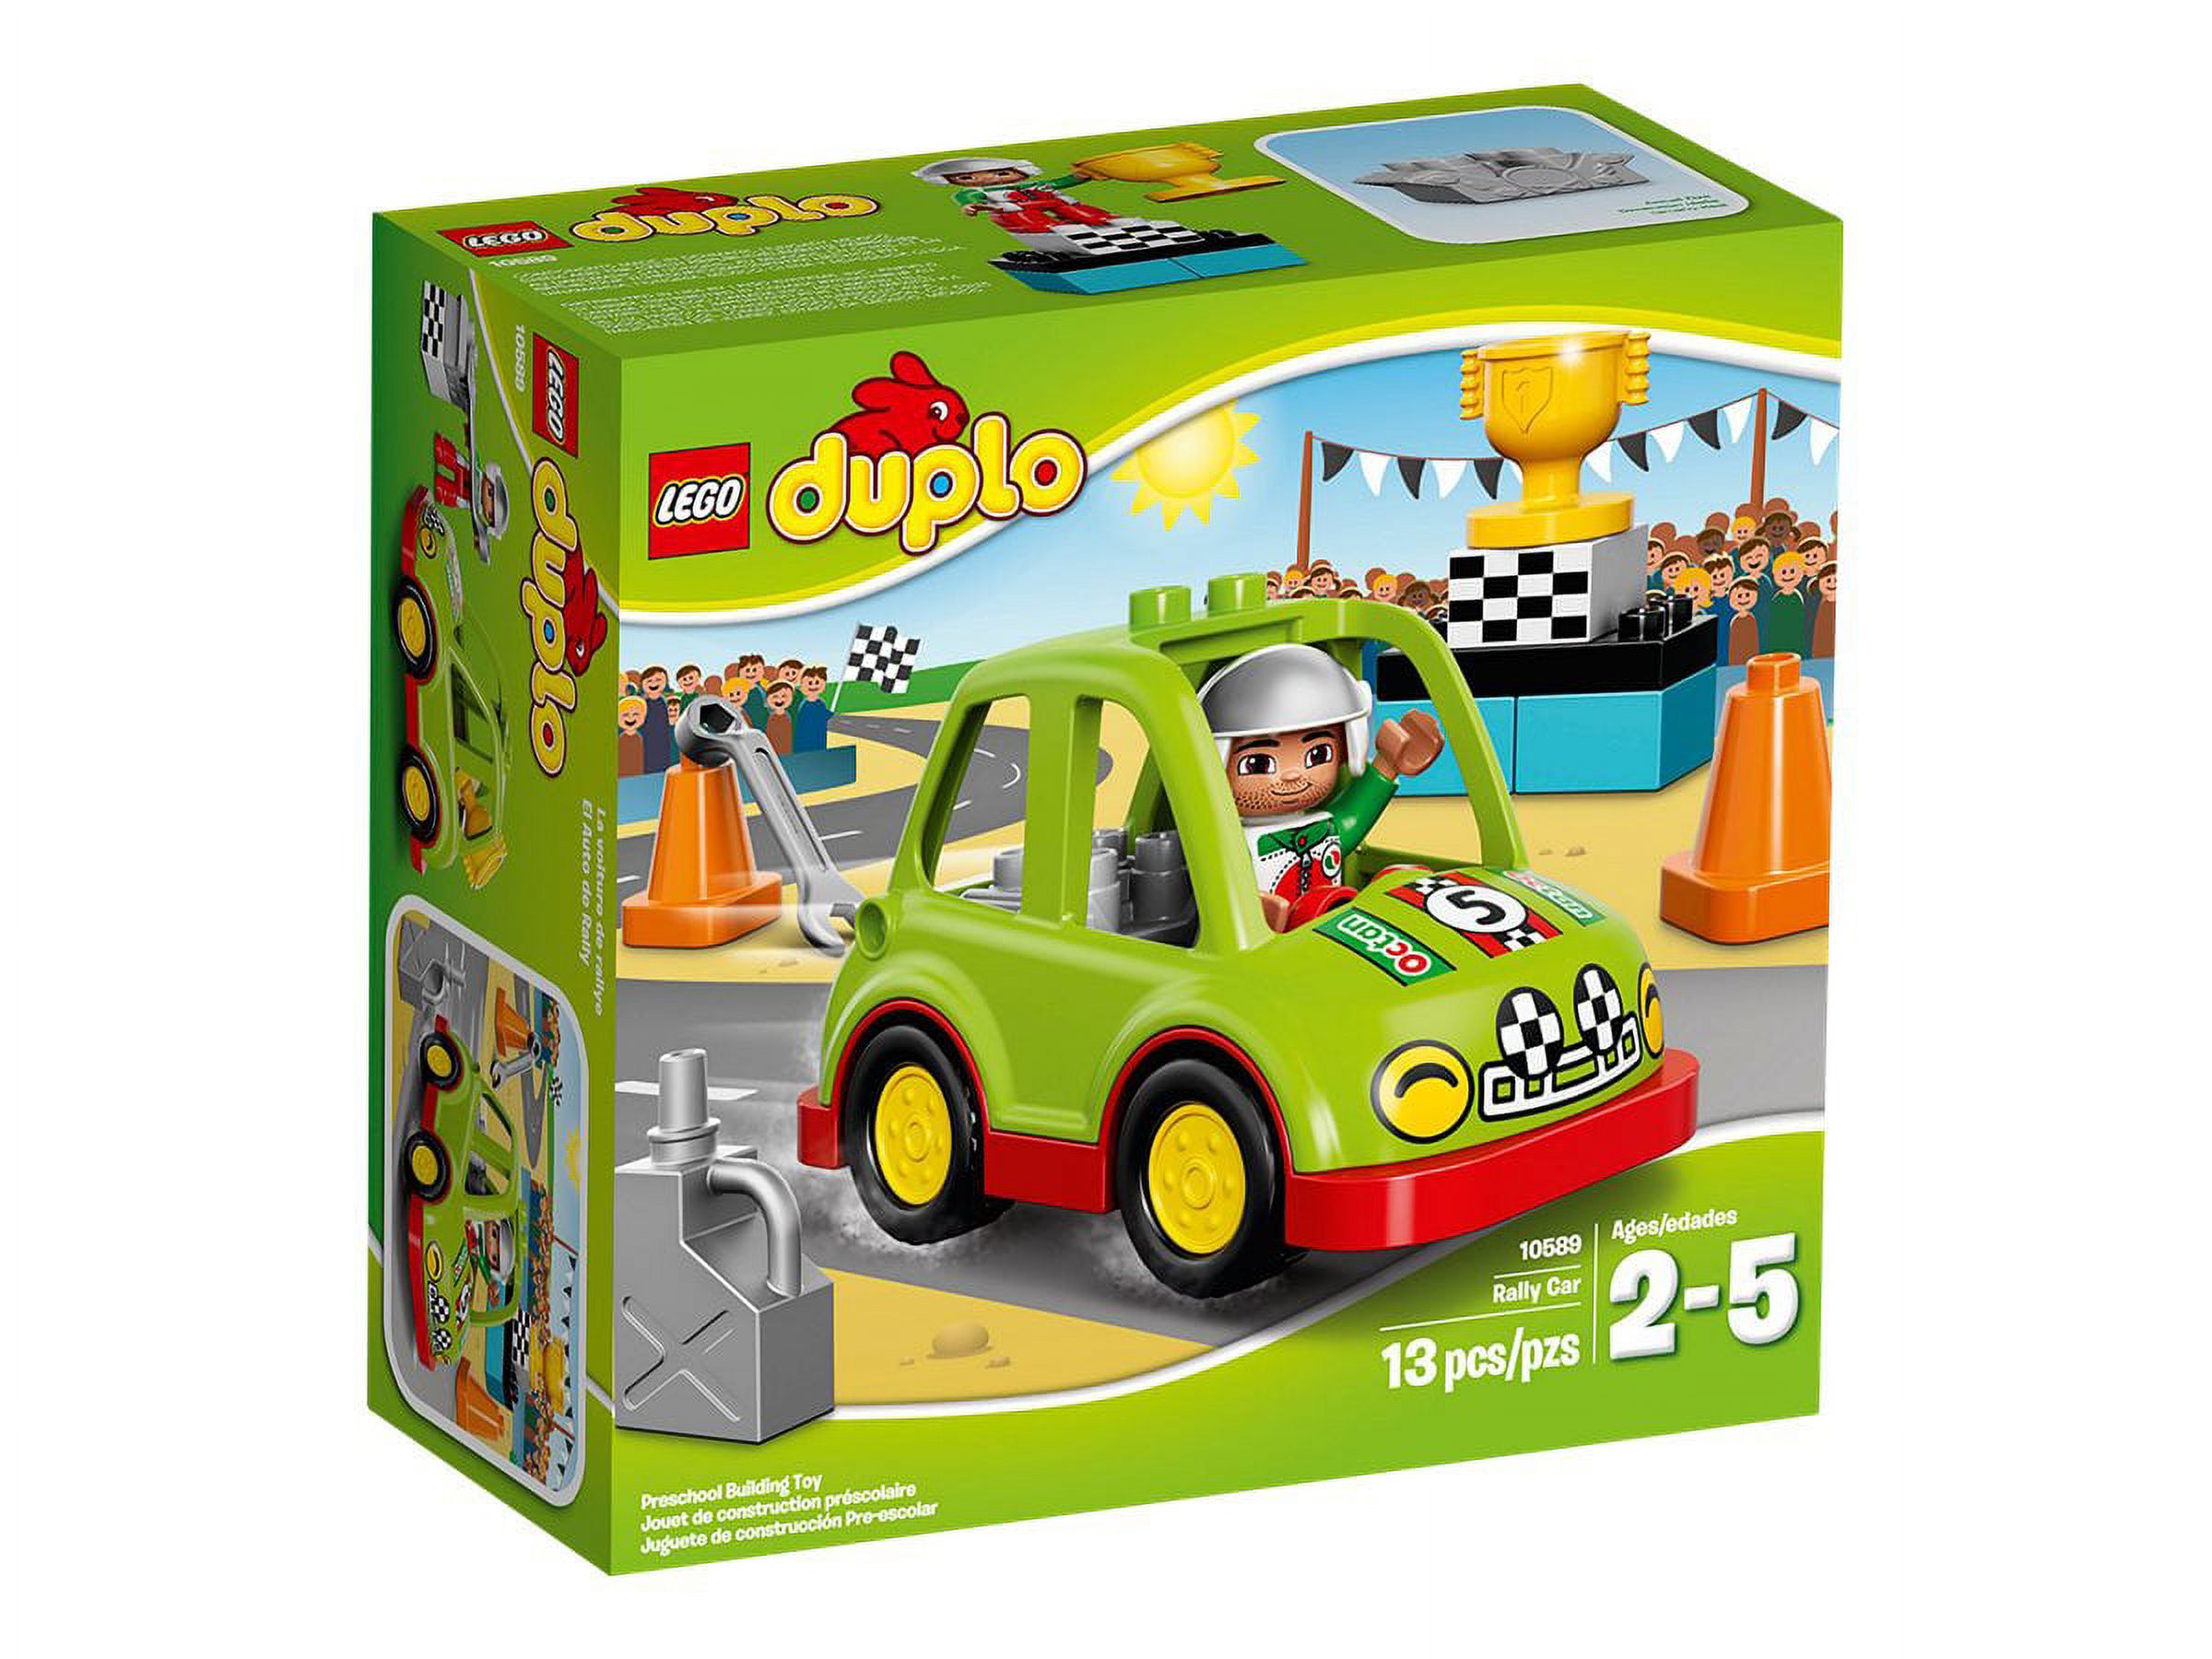 LEGO DUPLO 10589 - Rally Car - image 1 of 9